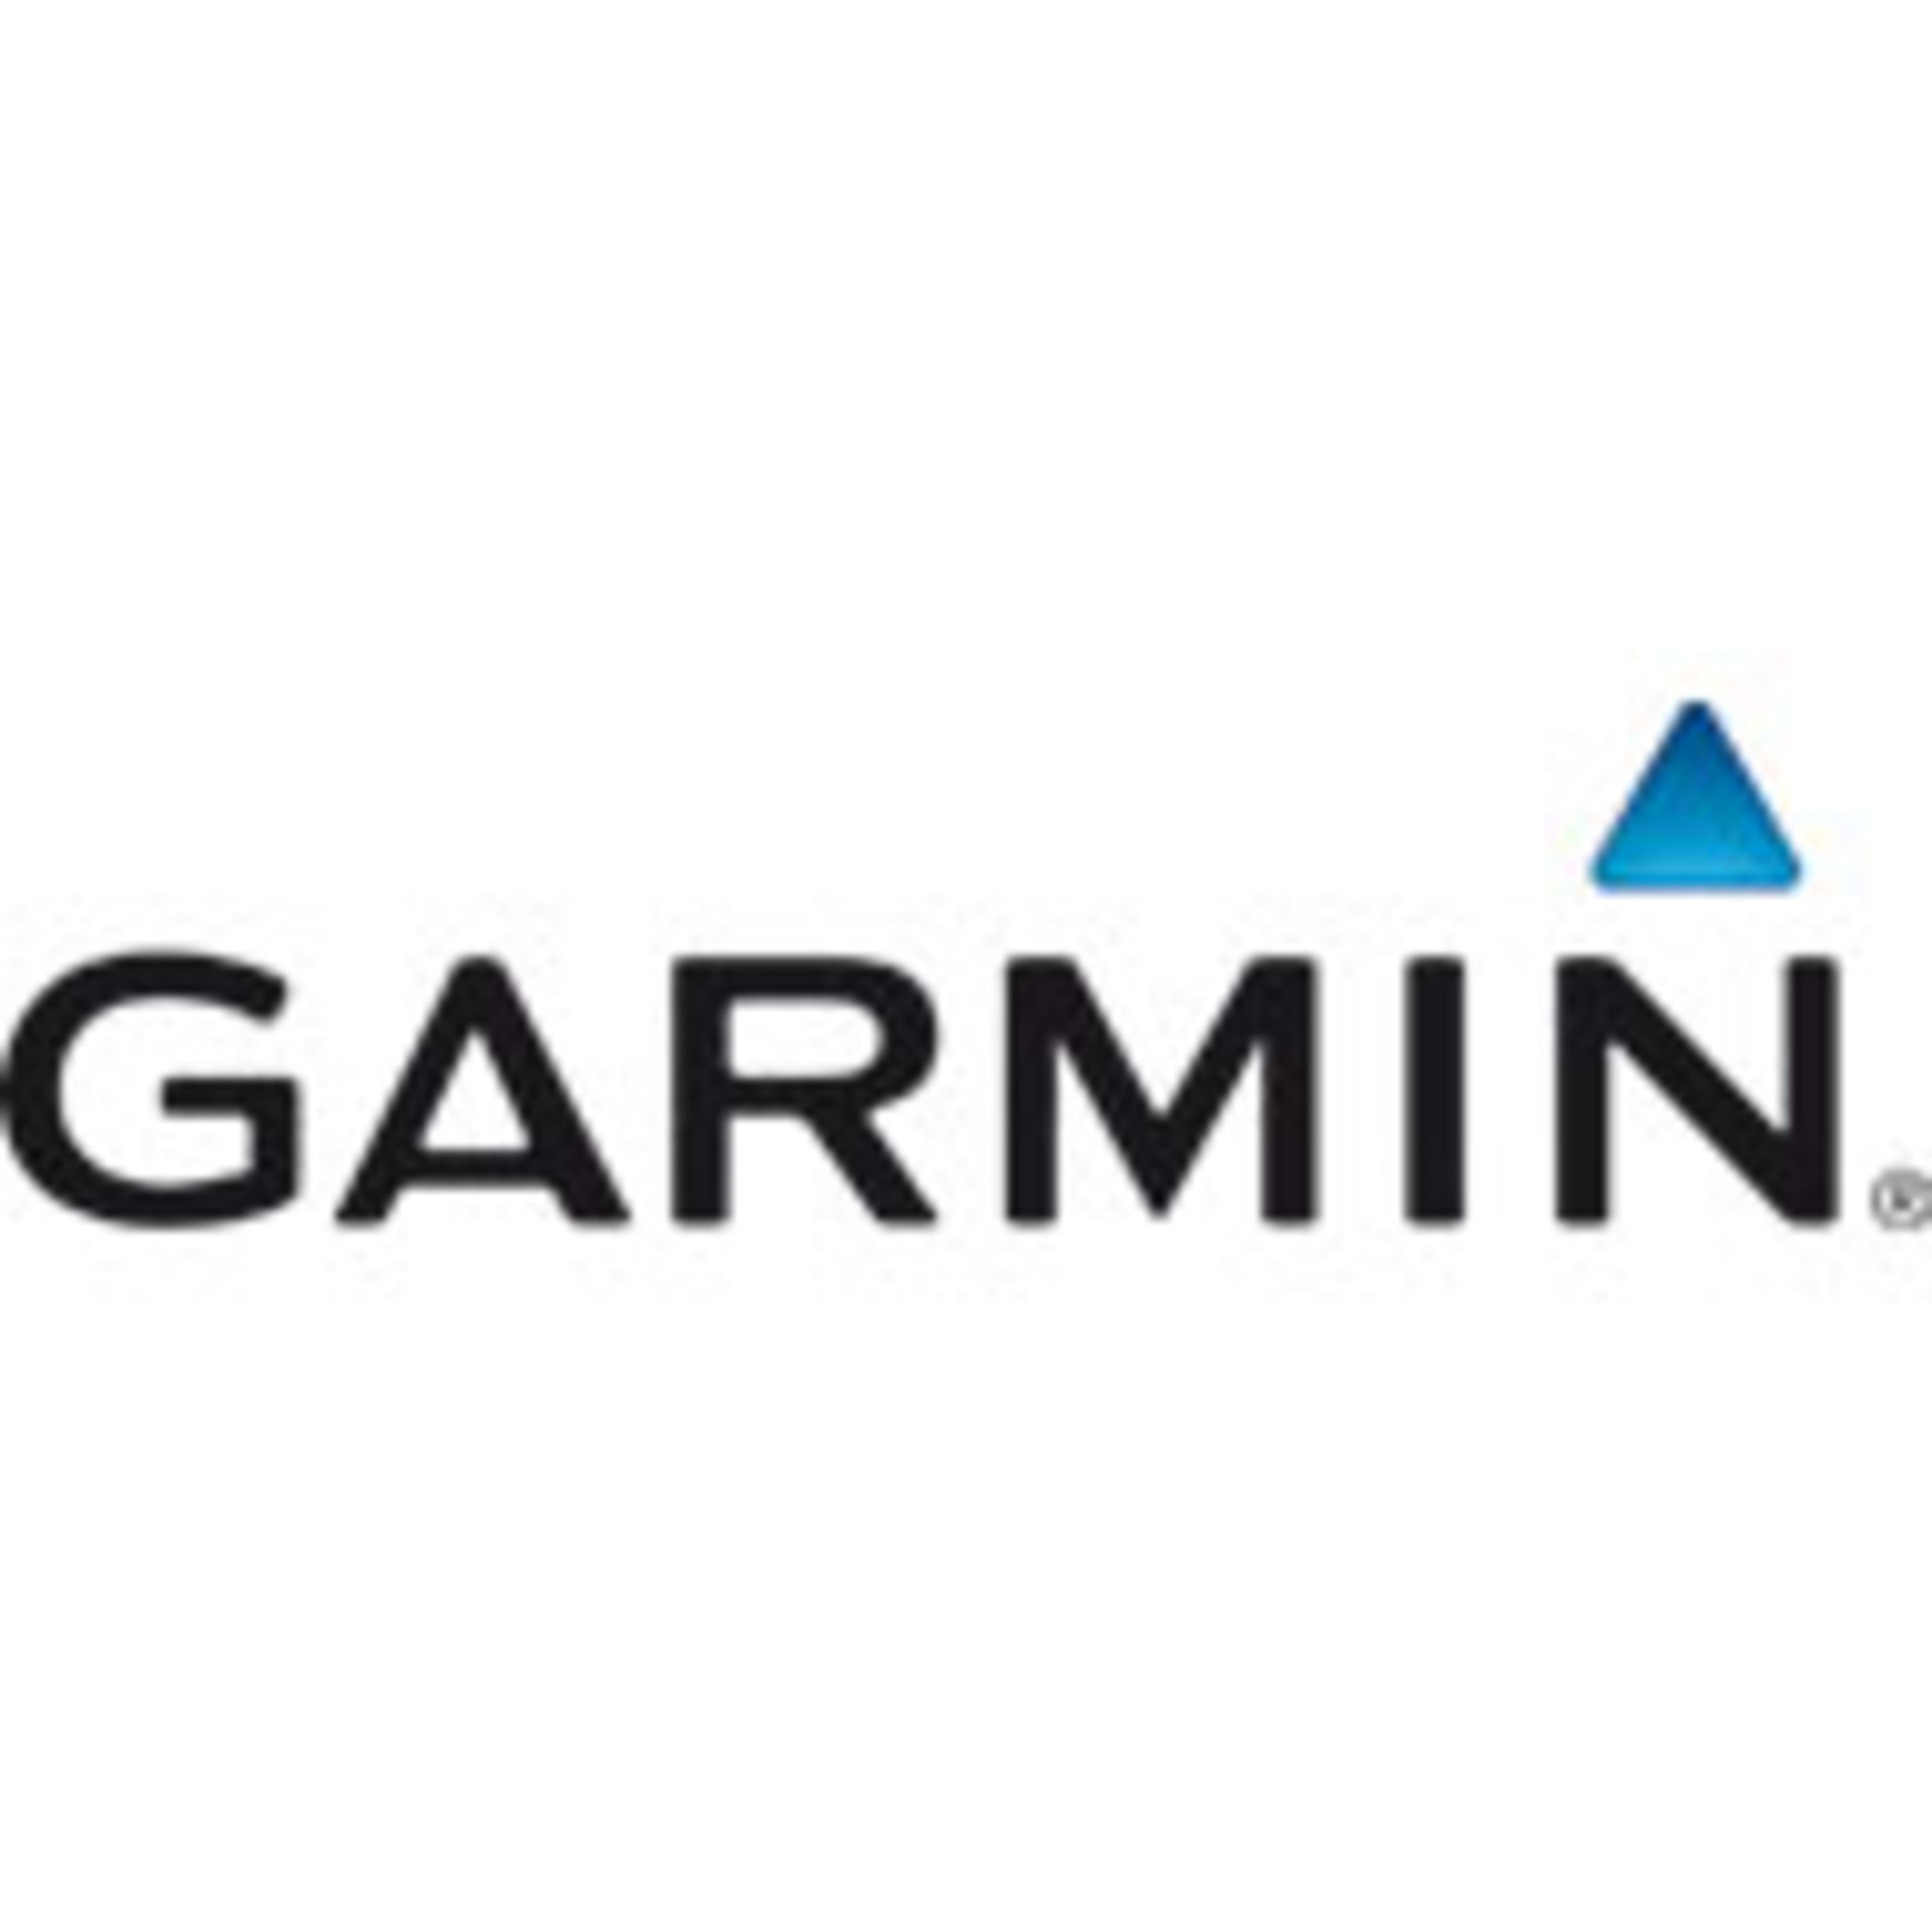 GARMIN Logo bei Elektro Niedermaier in Rottach Egern